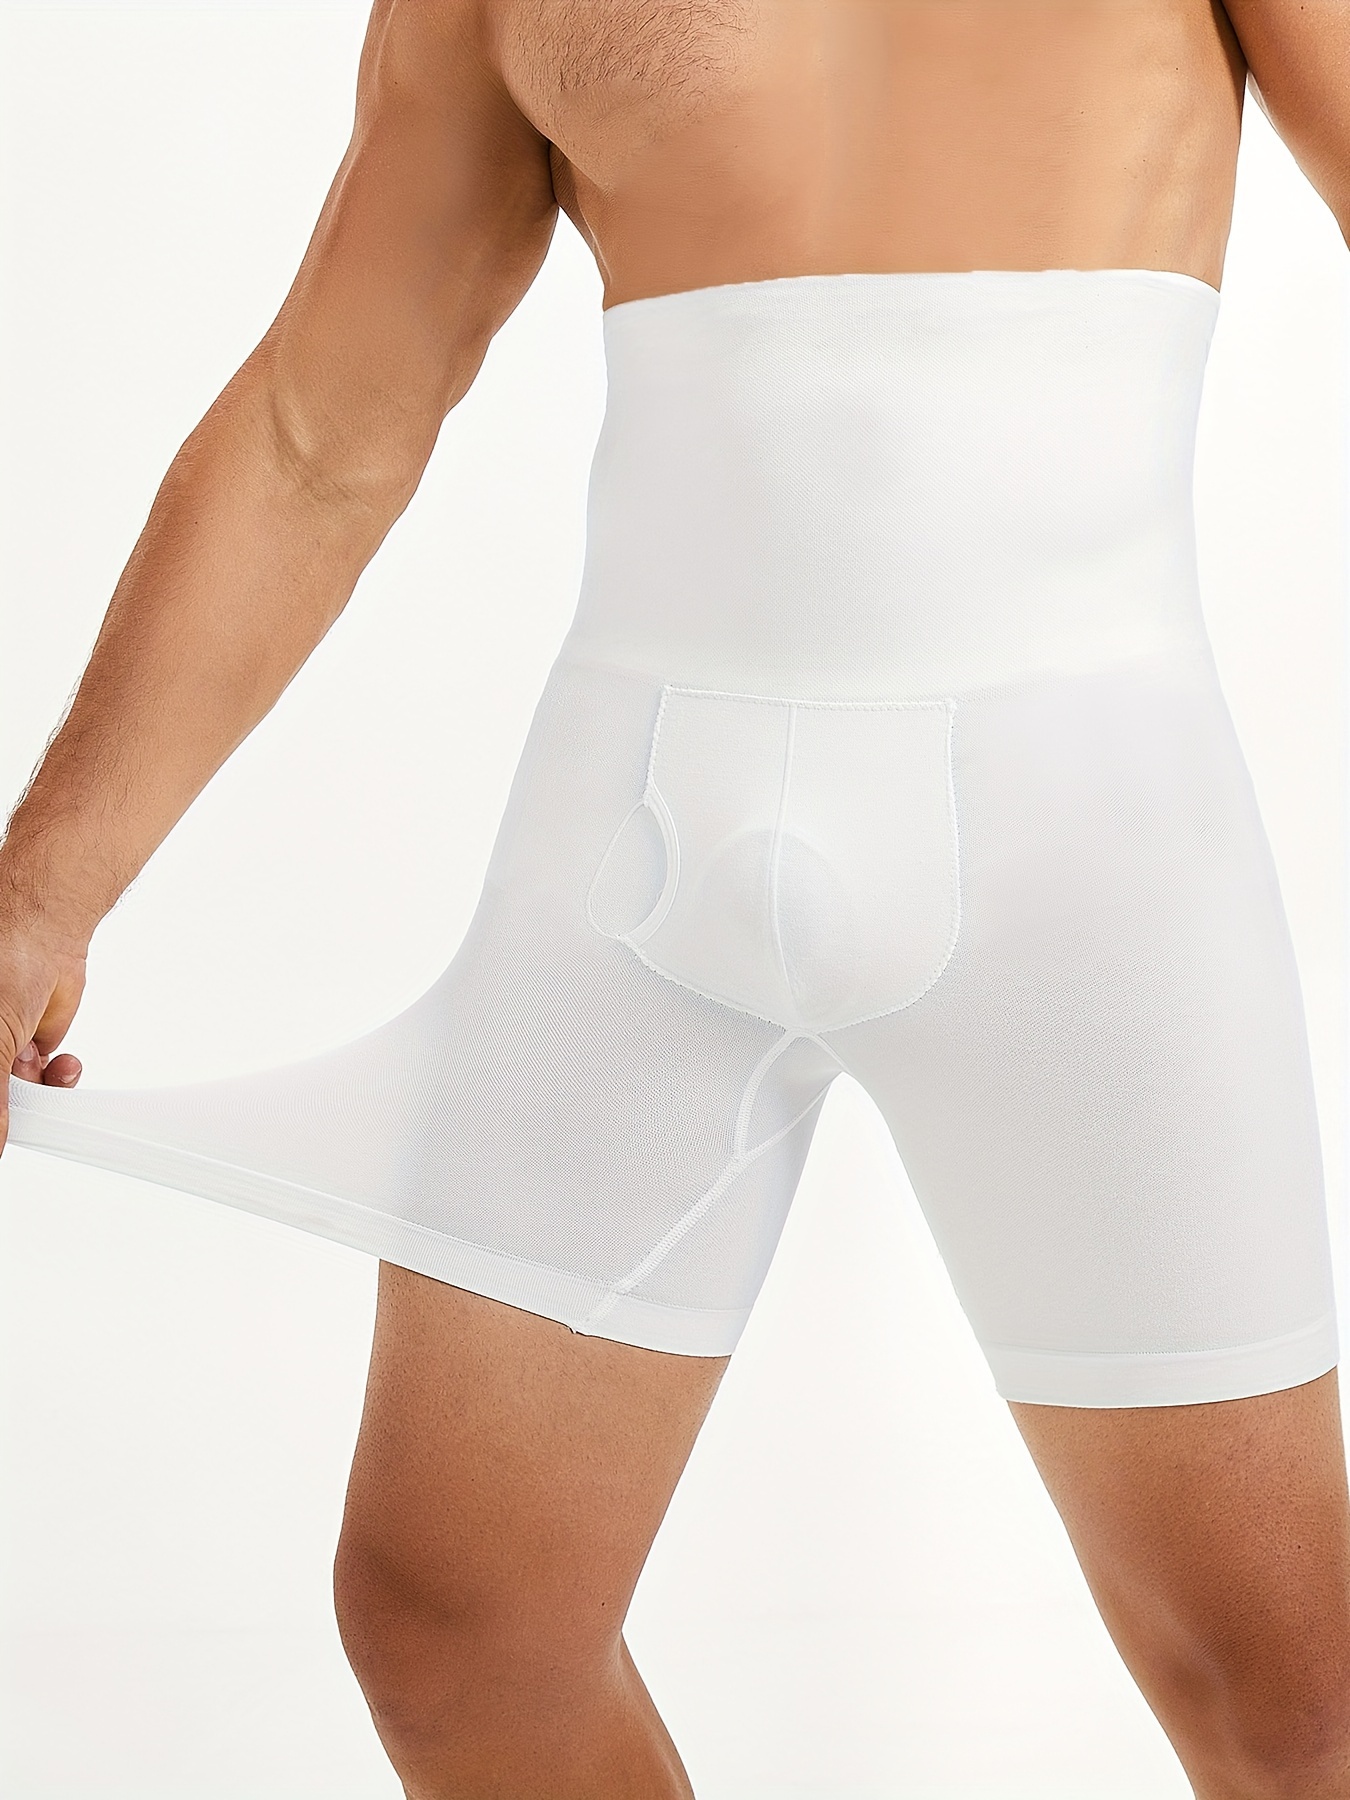 Men Tummy Control Shorts Body Shaper High Waist Slimming Shapewear